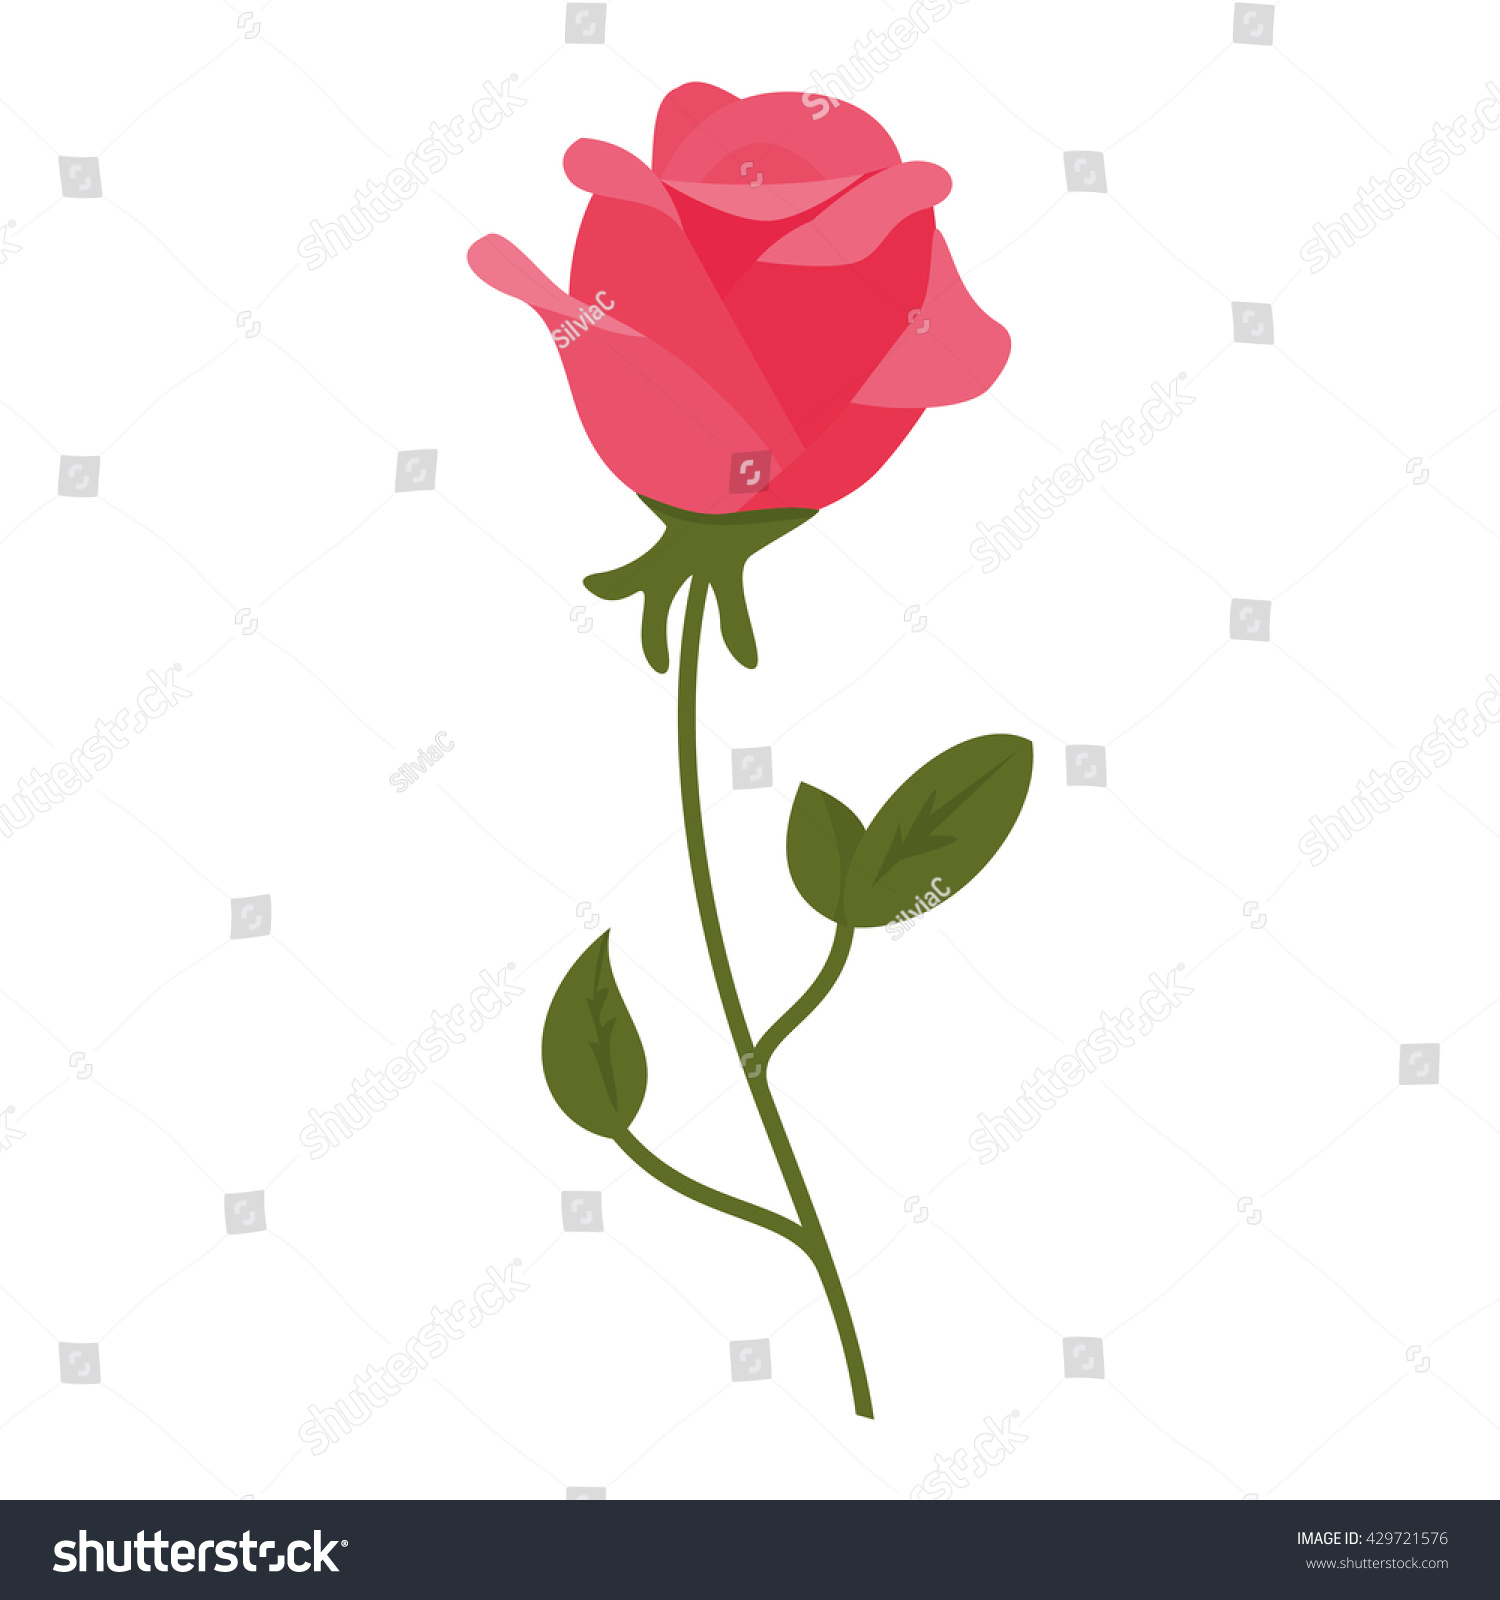 Rose Vector Icon - 429721576 : Shutterstock